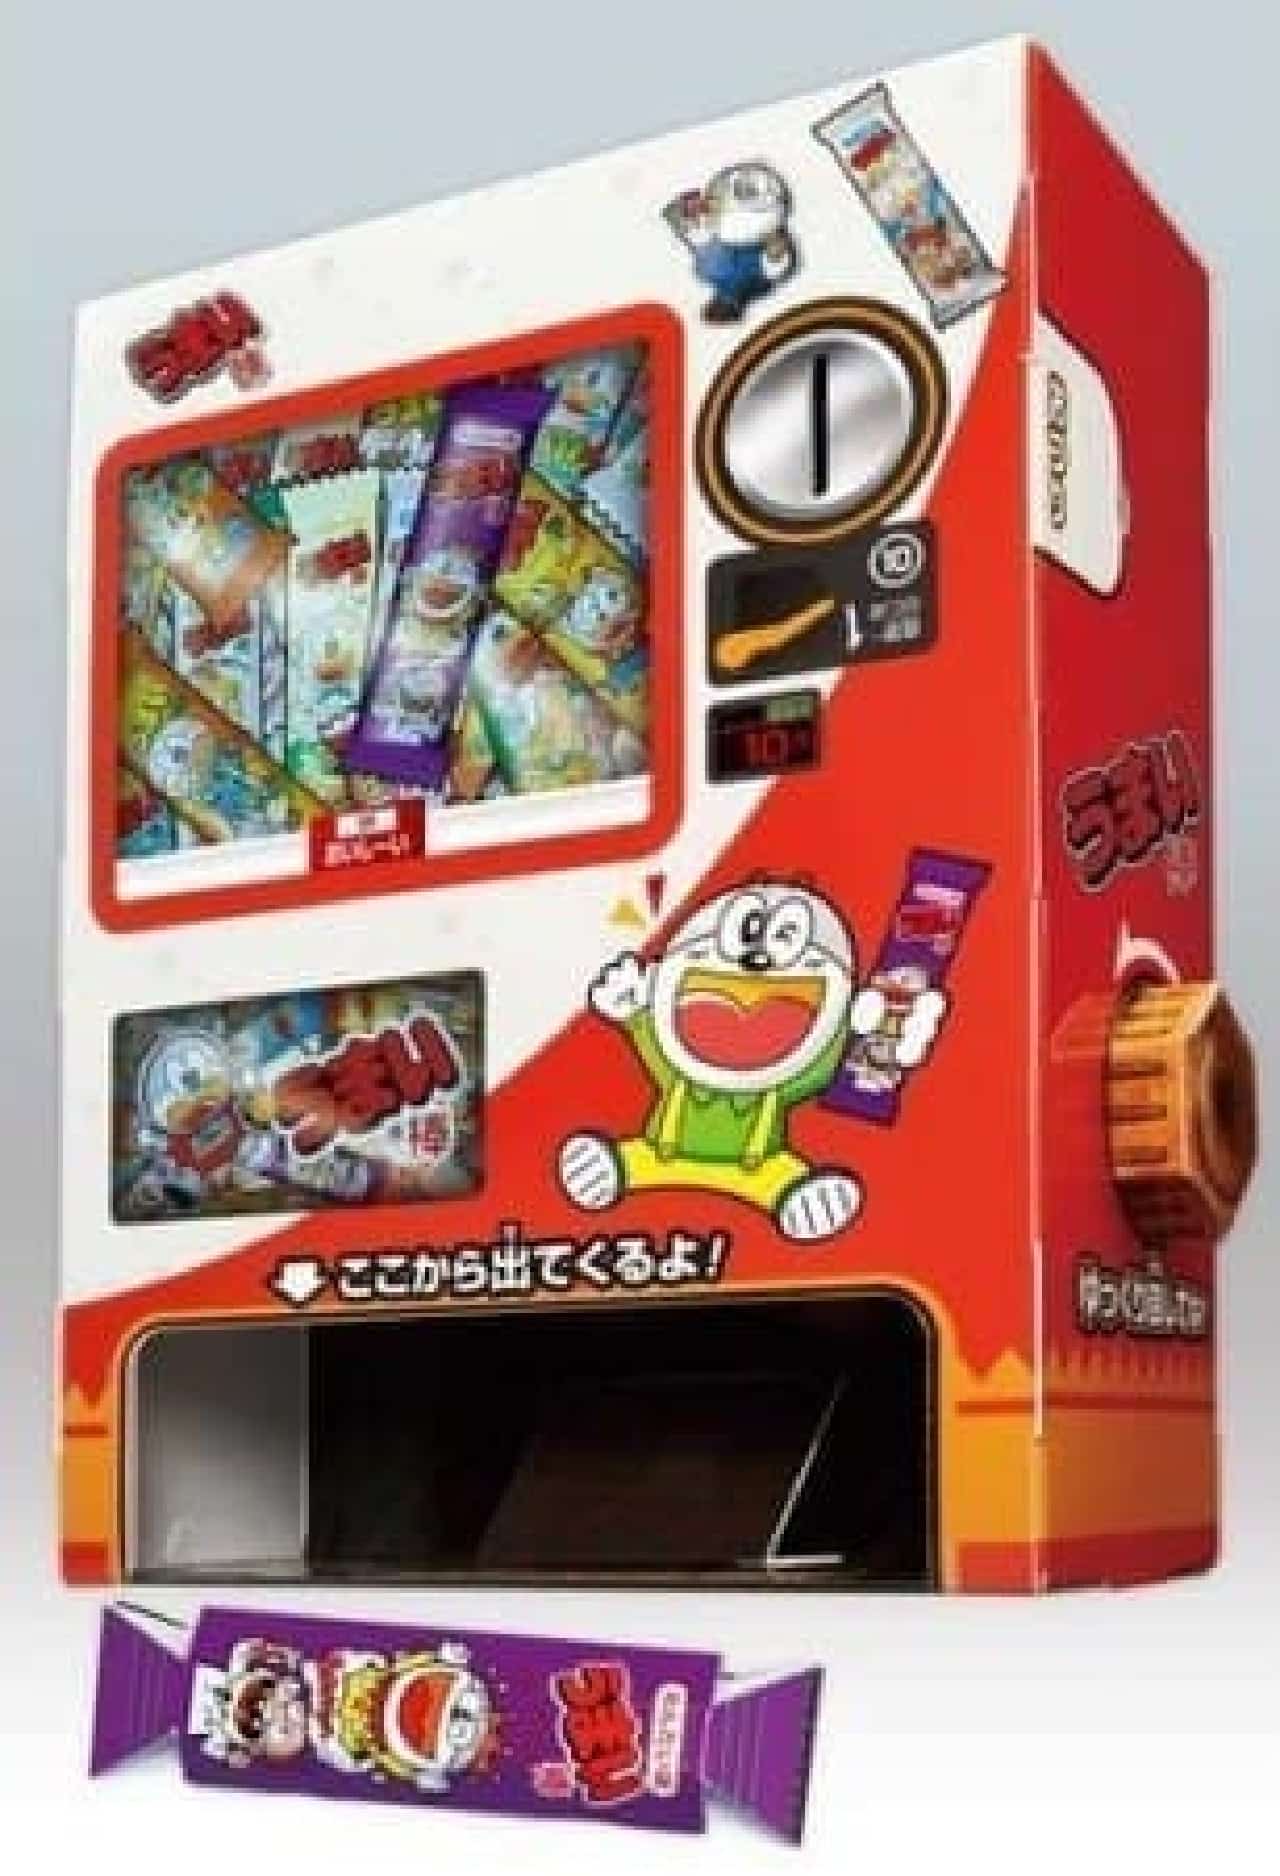 BANDAI "Sakutto work! Umaibo vending machine"